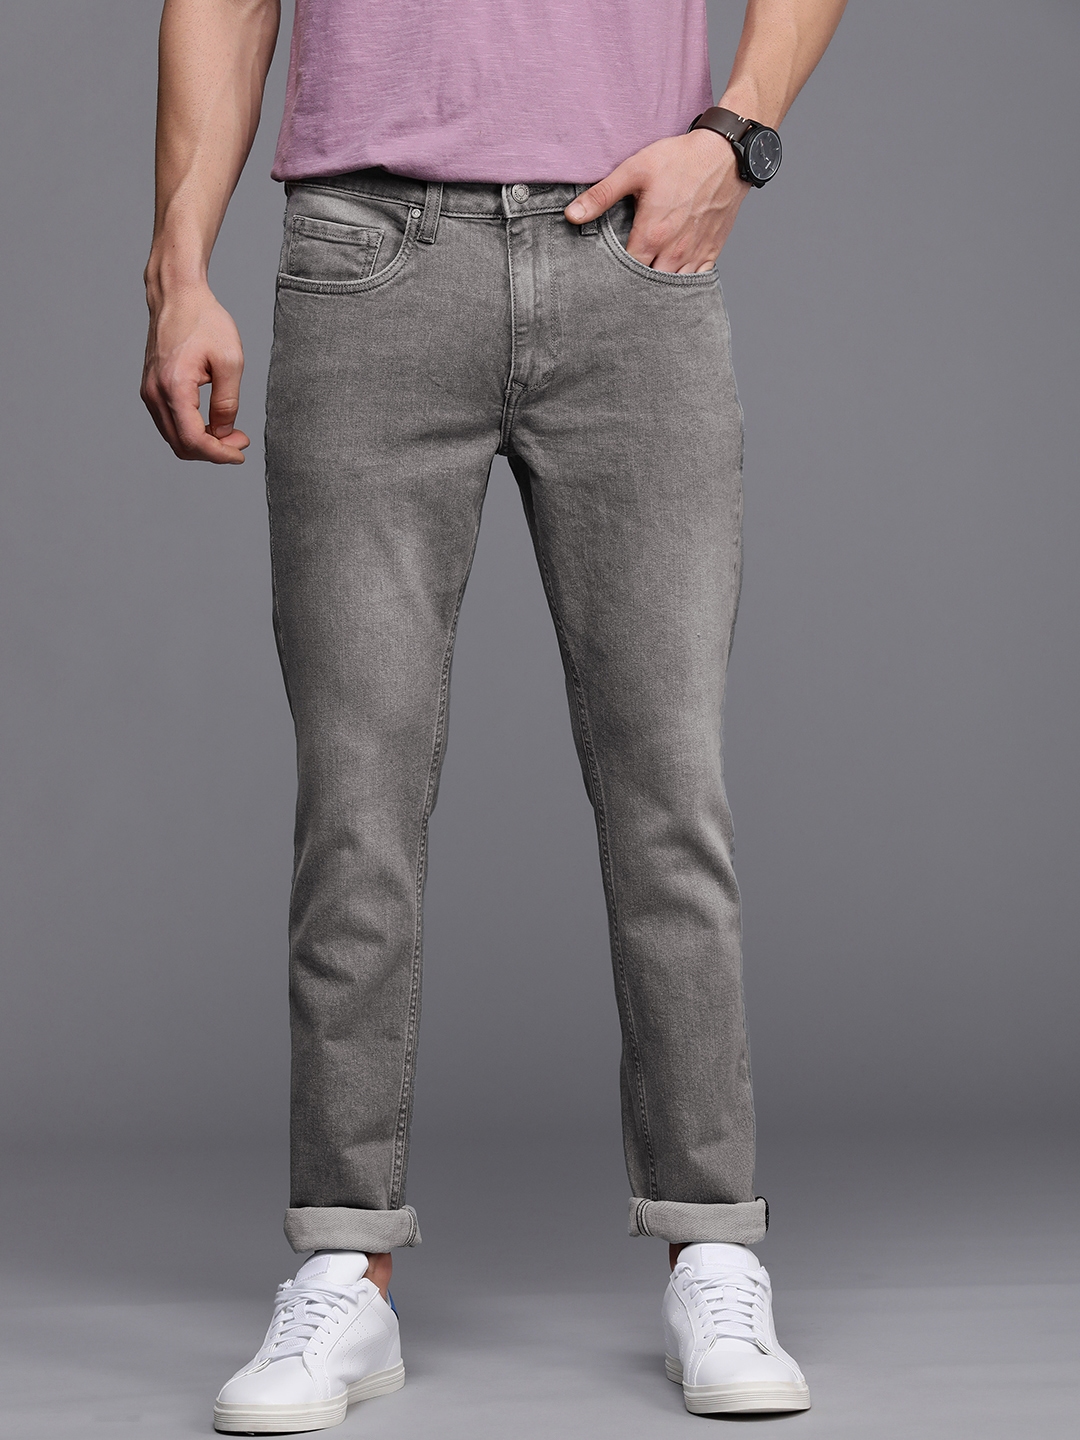 Buy Louis Philippe Jeans Men Grey Super Slim Fit Low Rise